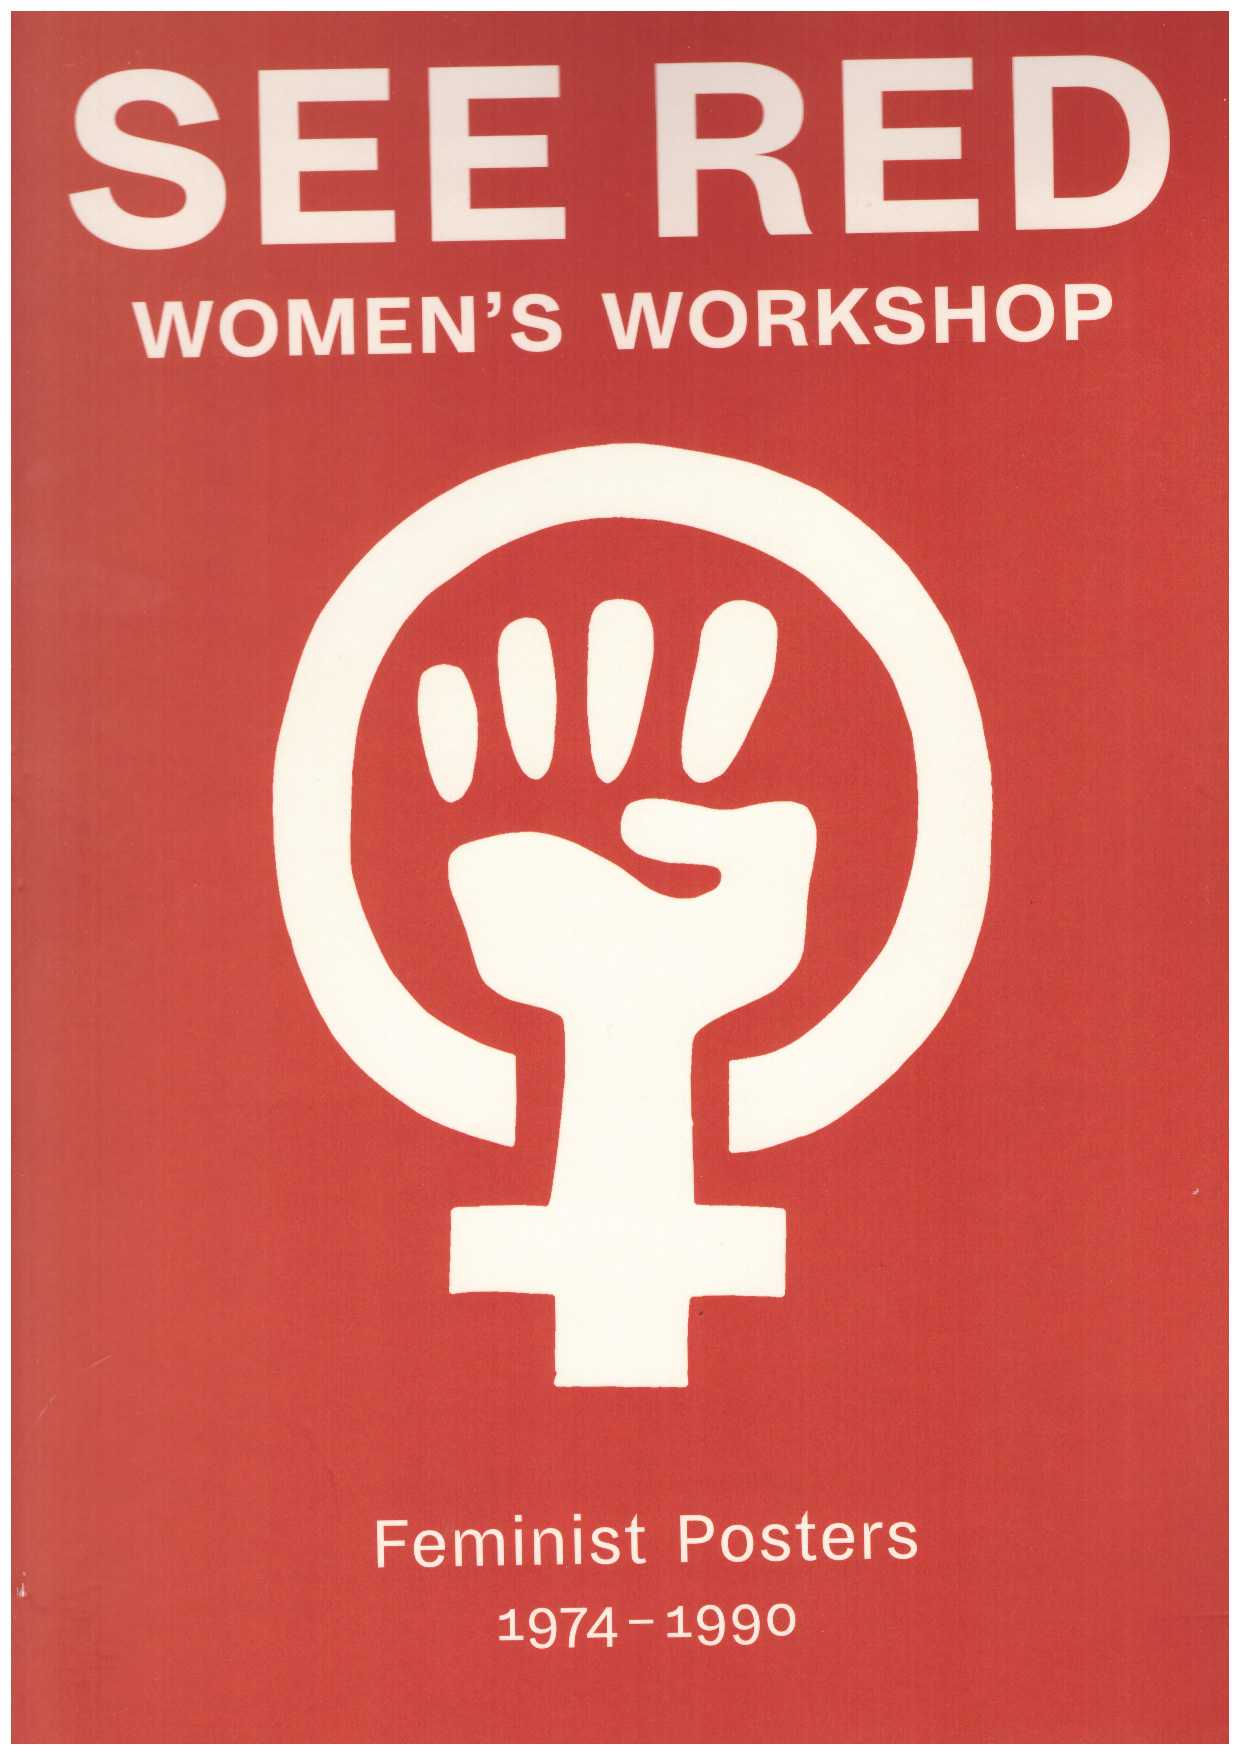 See Red Women's Workshop - See Red Women's Workshop: Feminist Posters 1974-1990